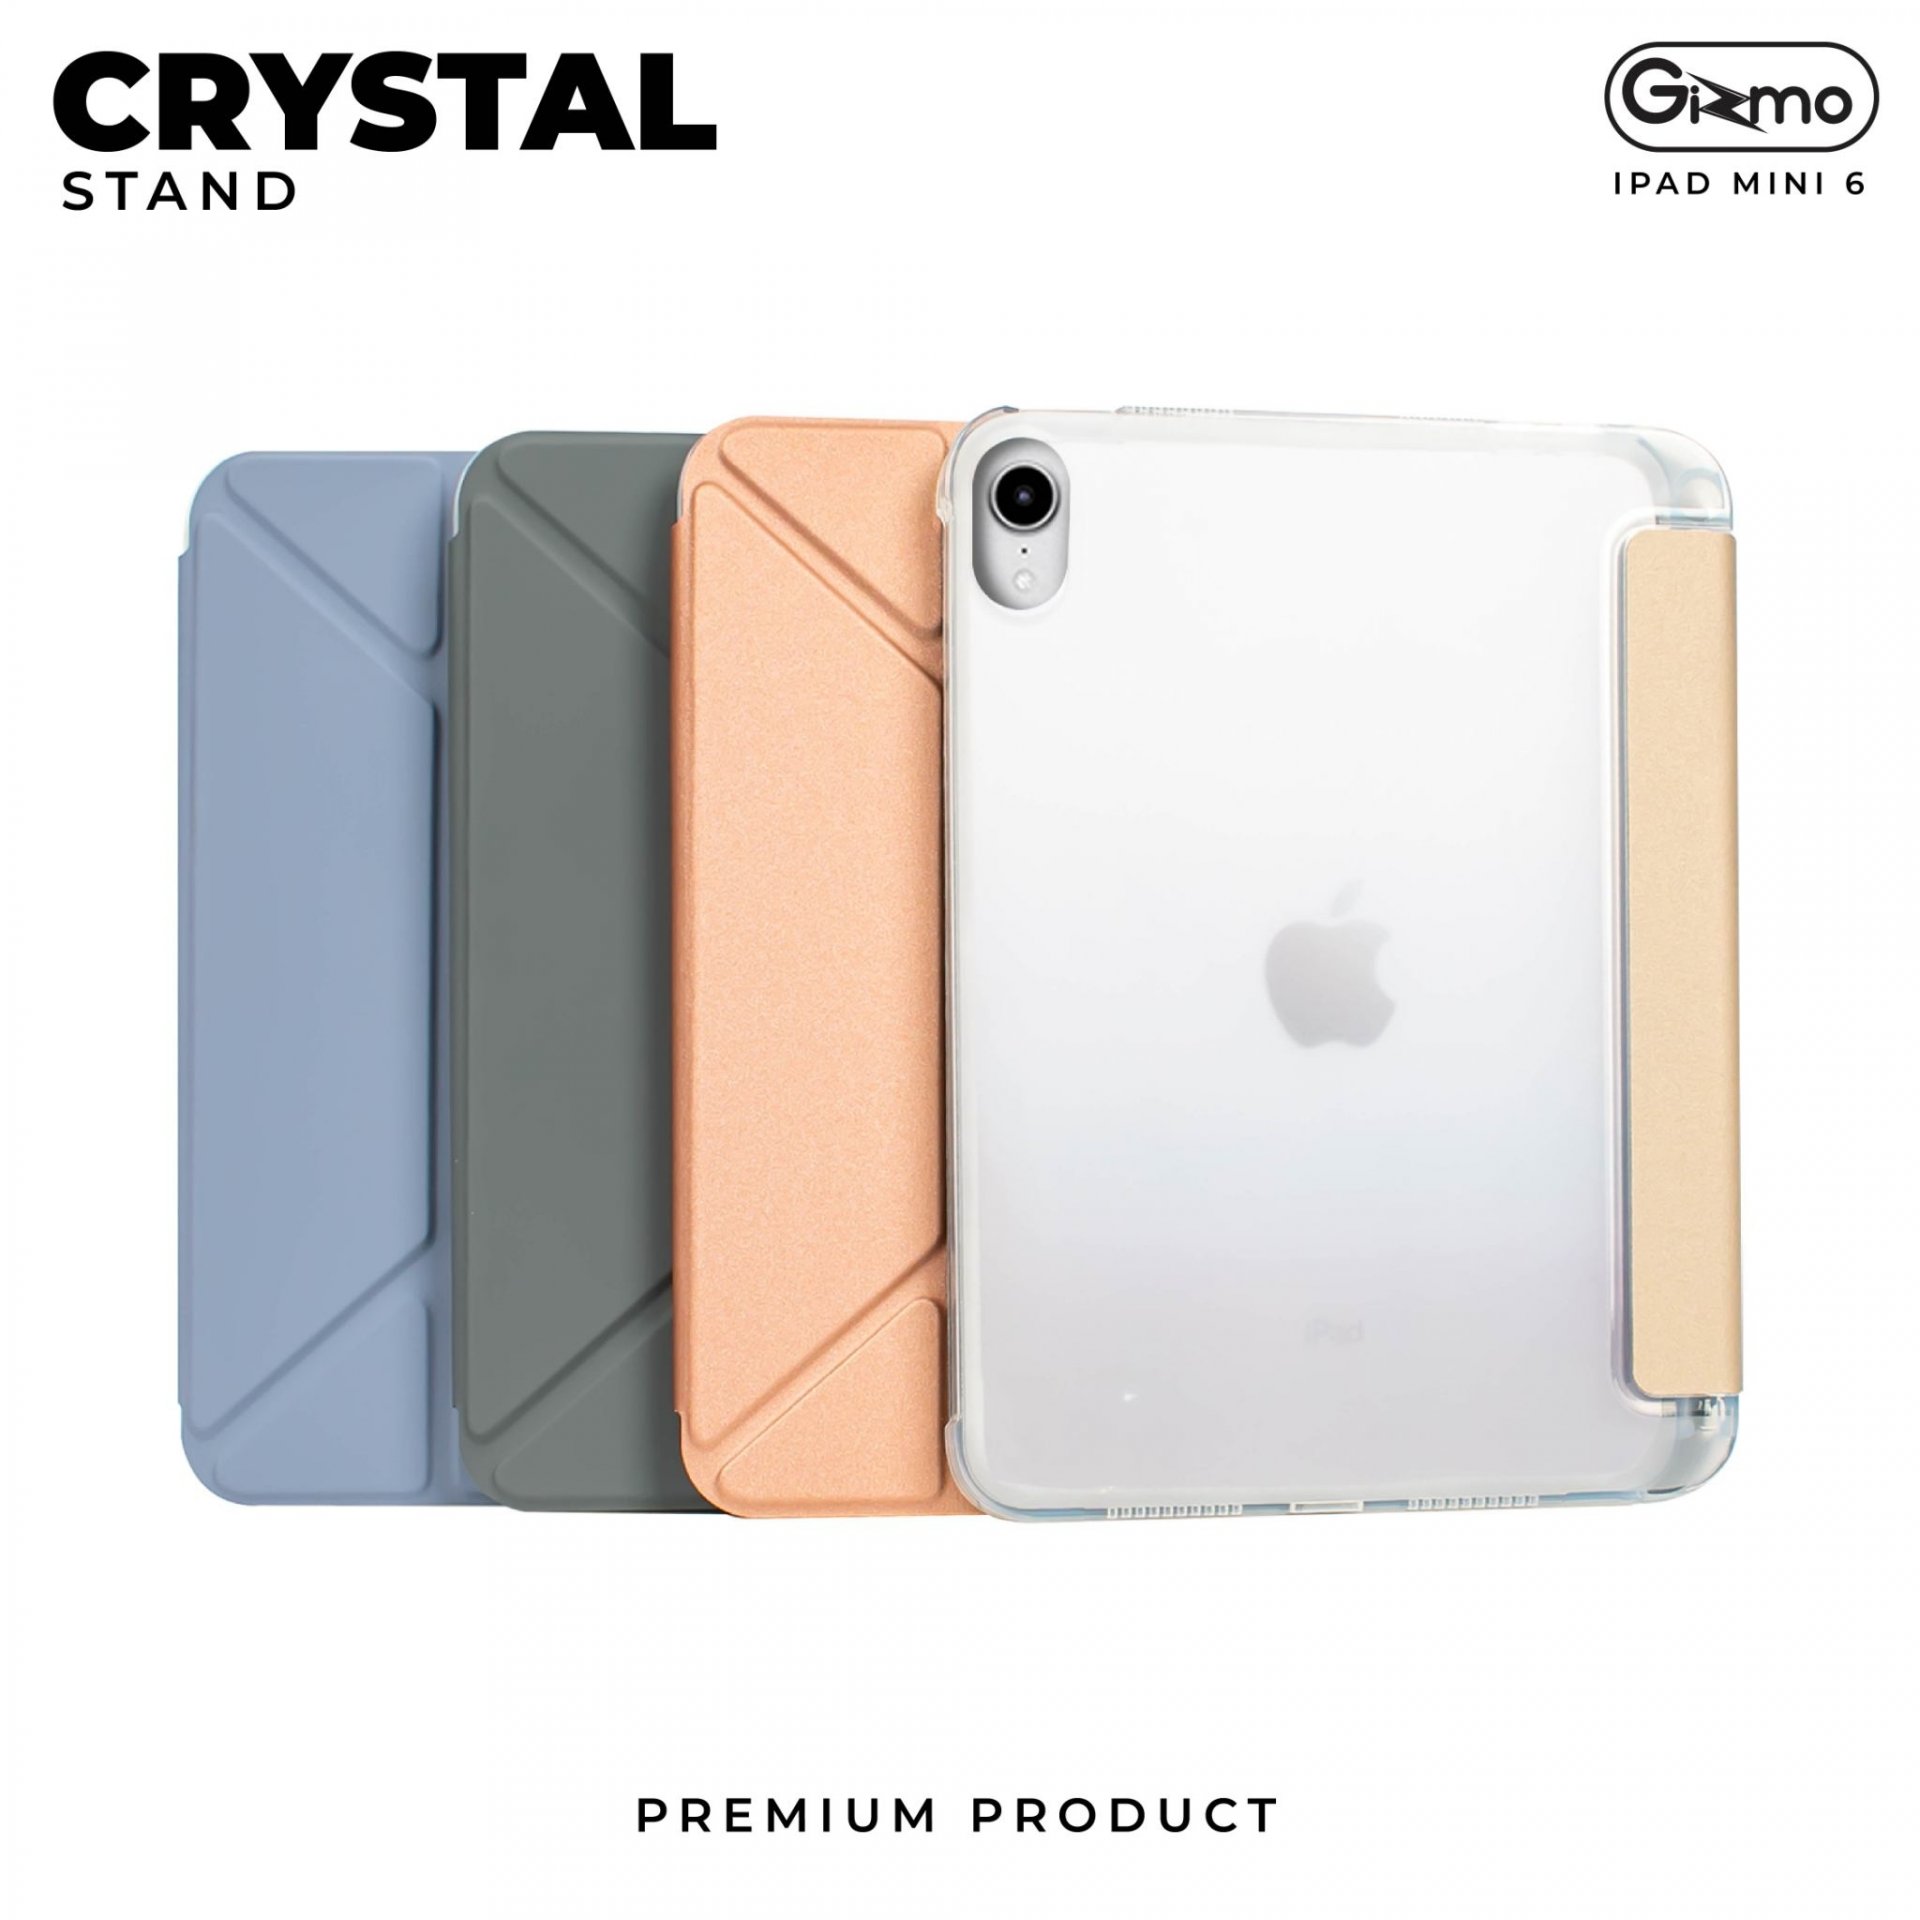 Gizmo เคส iPad Mini 6 เคสไอแพดมินิ6 ด้านหลังใส รุ่น Crystal Stand